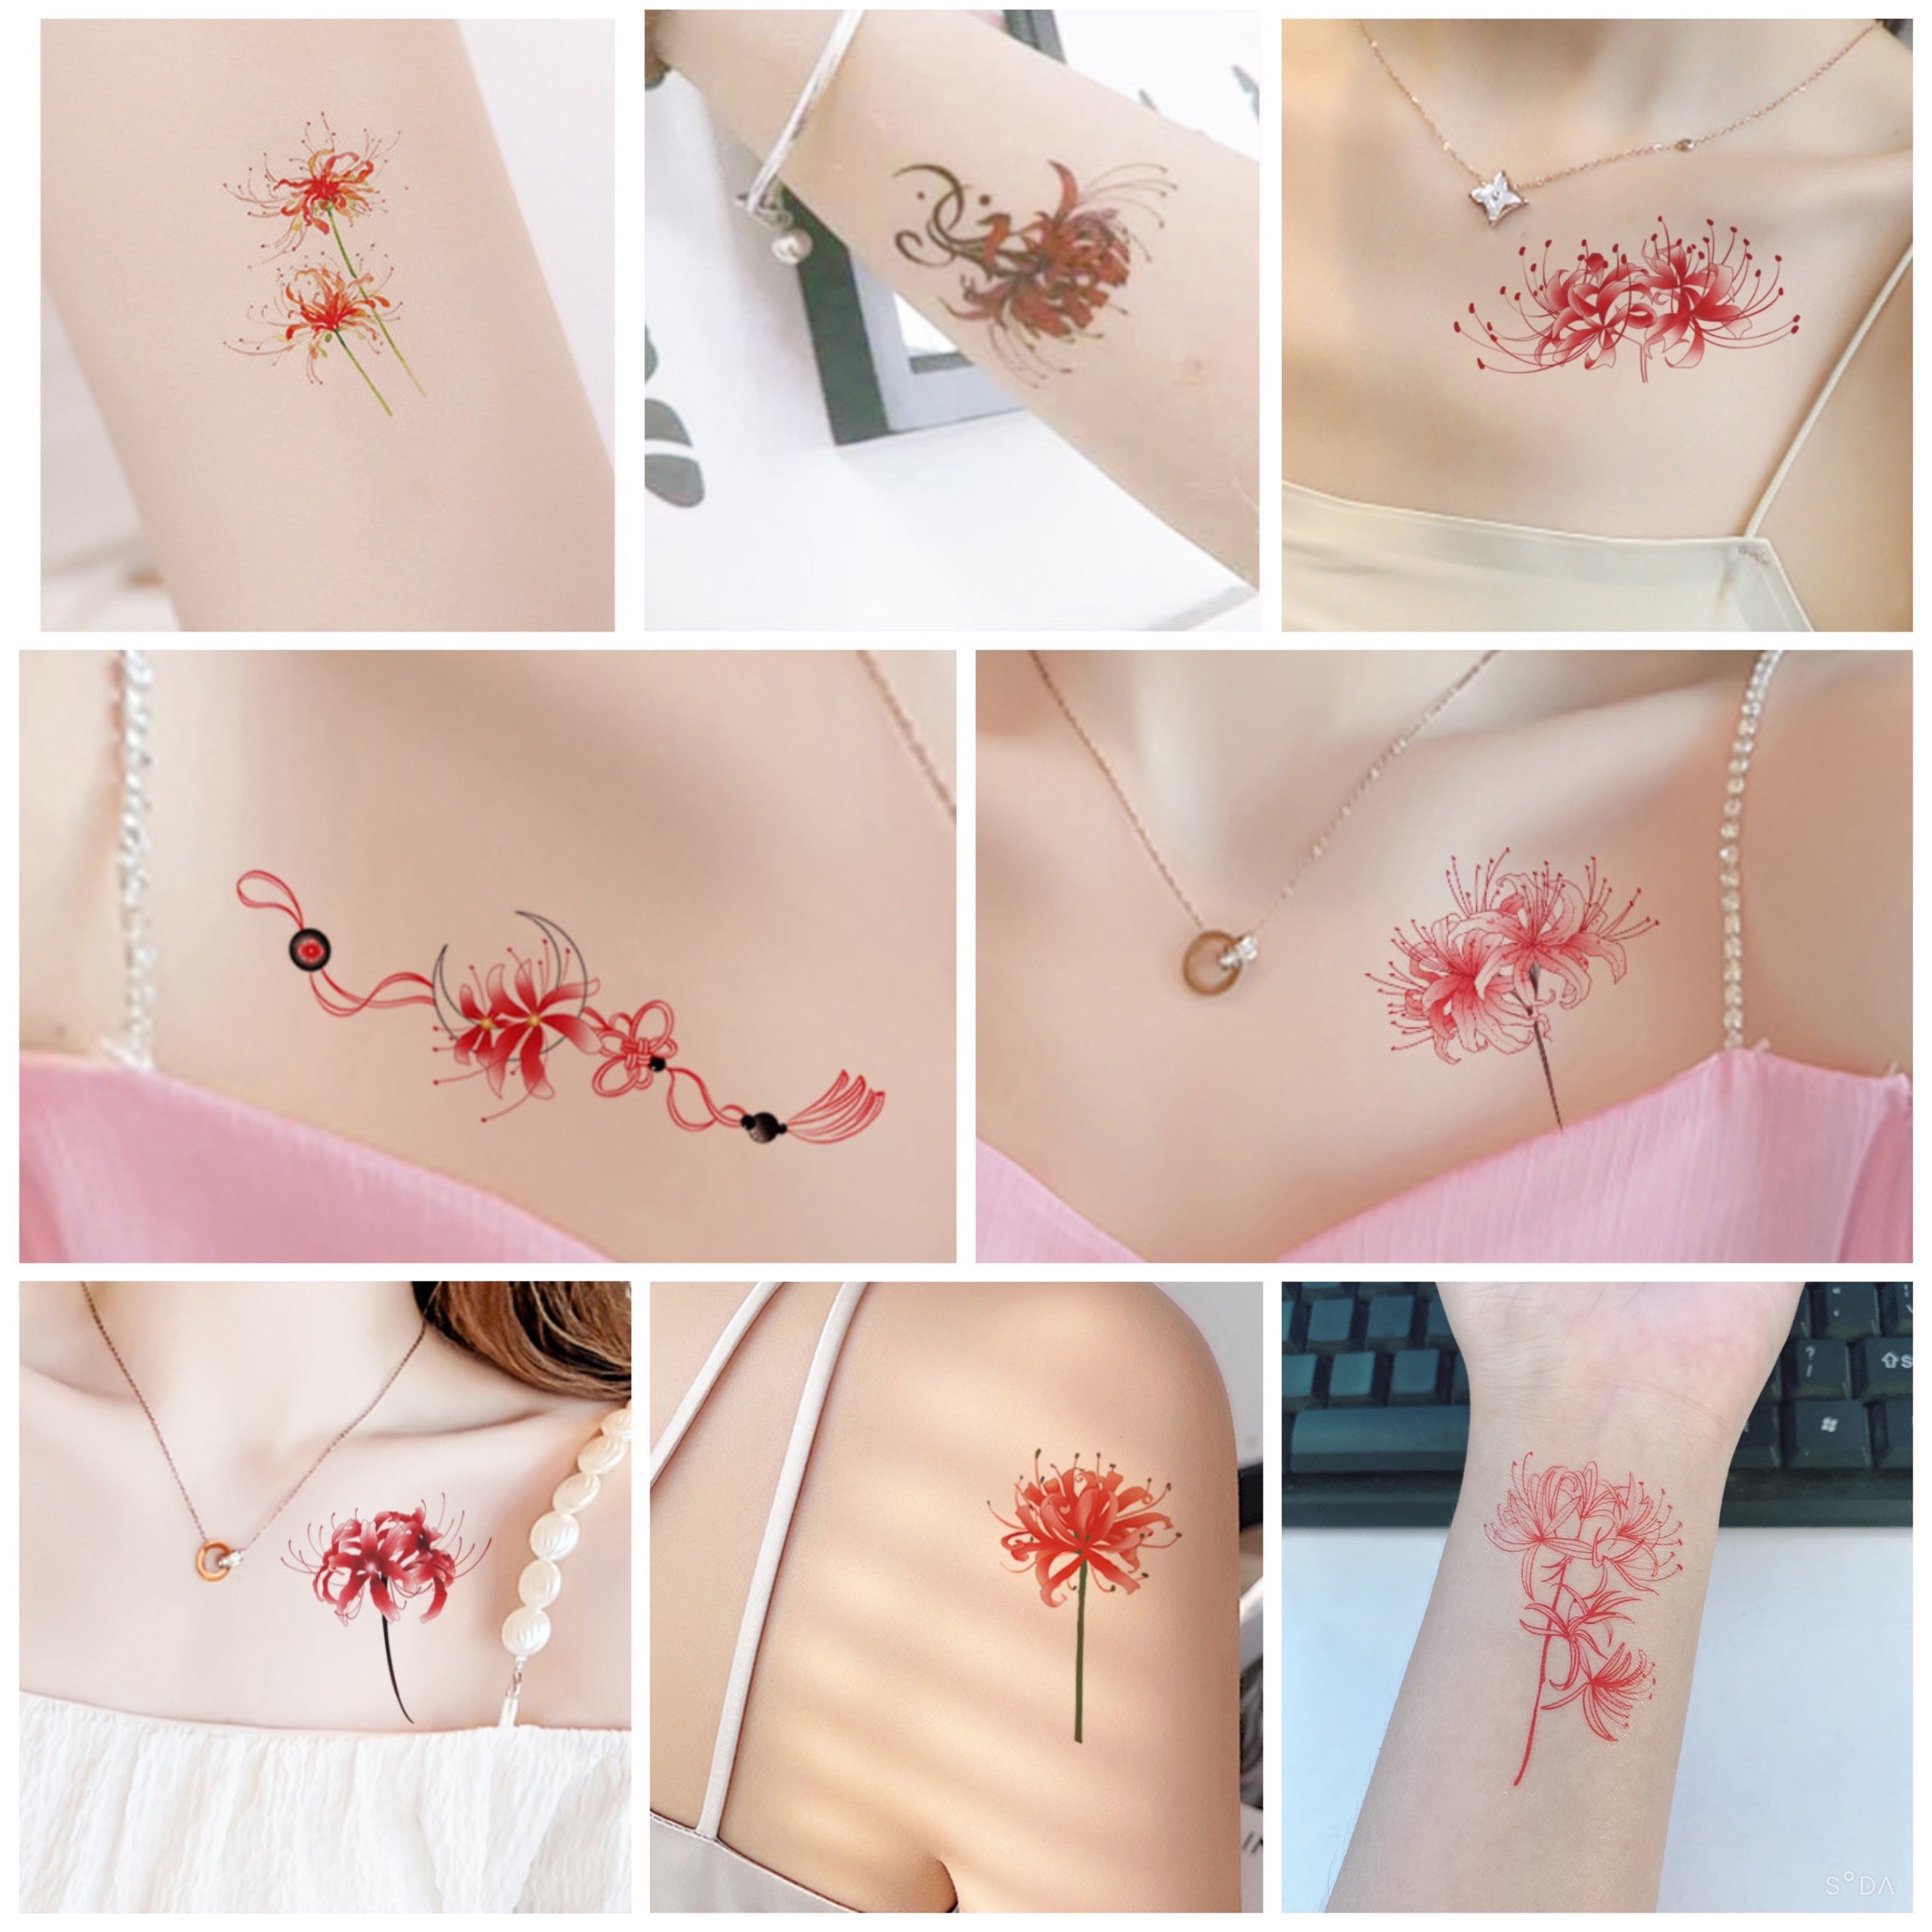 Hình xăm dán tattoo hoa sen - Candyshop88